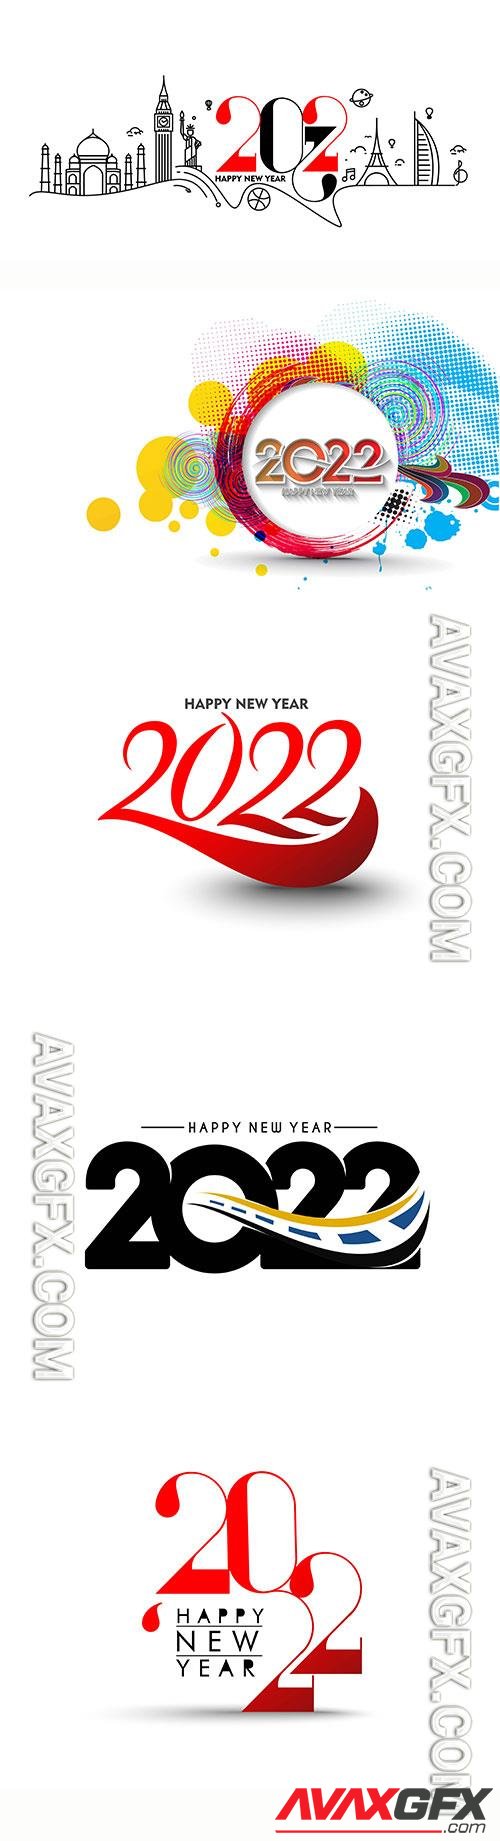 Happy new year 2022 text typography vector design